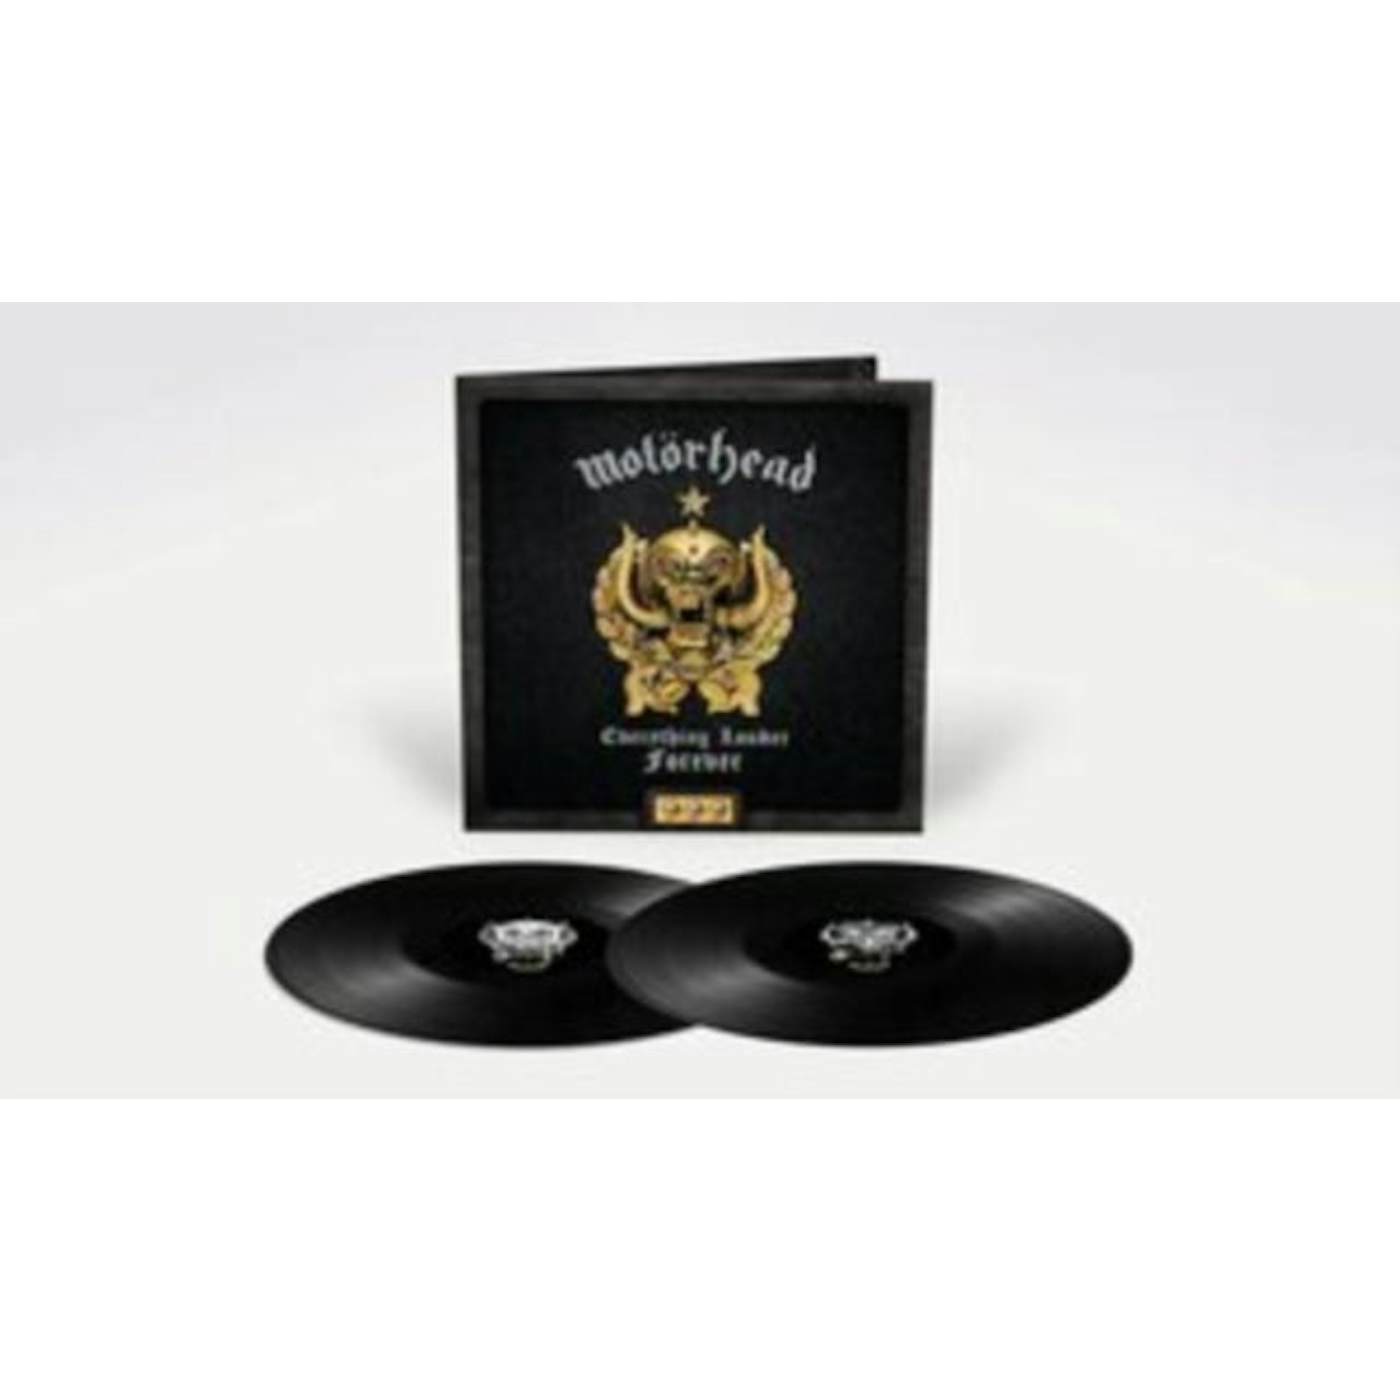 Motörhead LP Vinyl Record - Everything Louder Forever - The Very Best Of